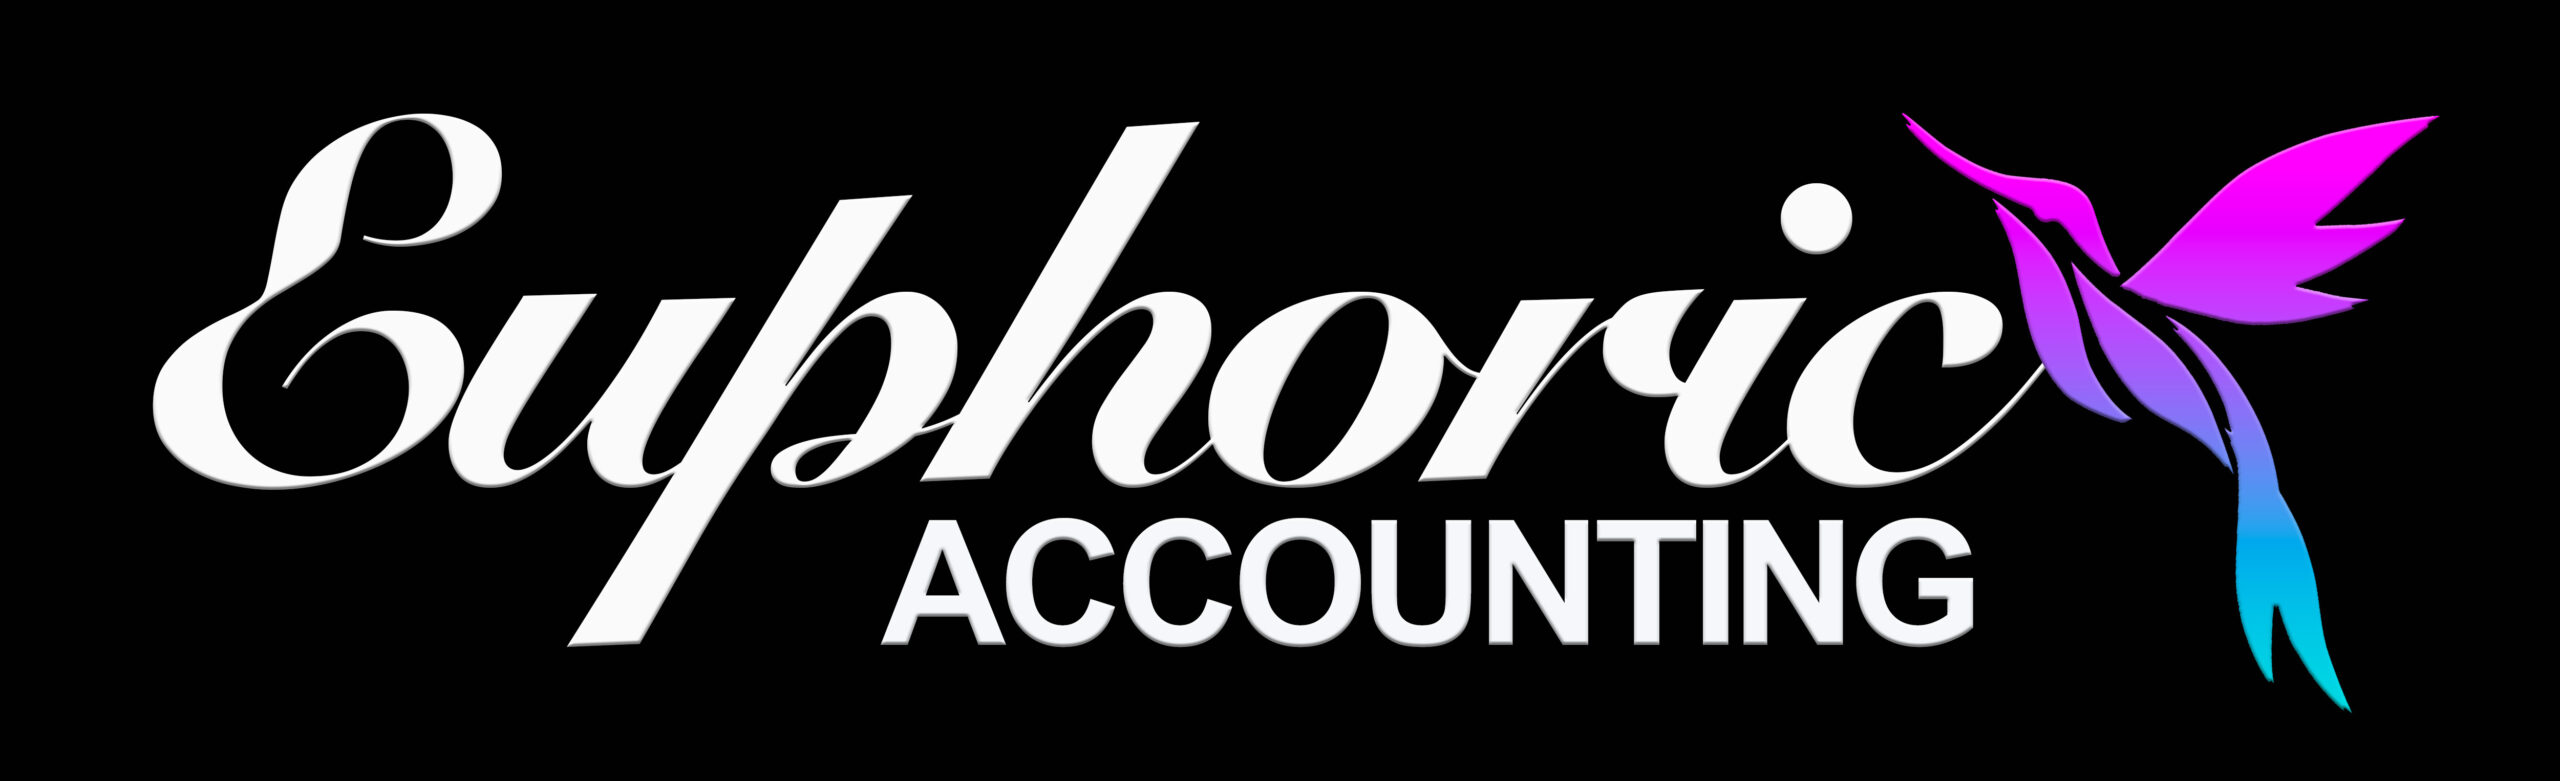 Euphoric Accounting Logo White Text scaled